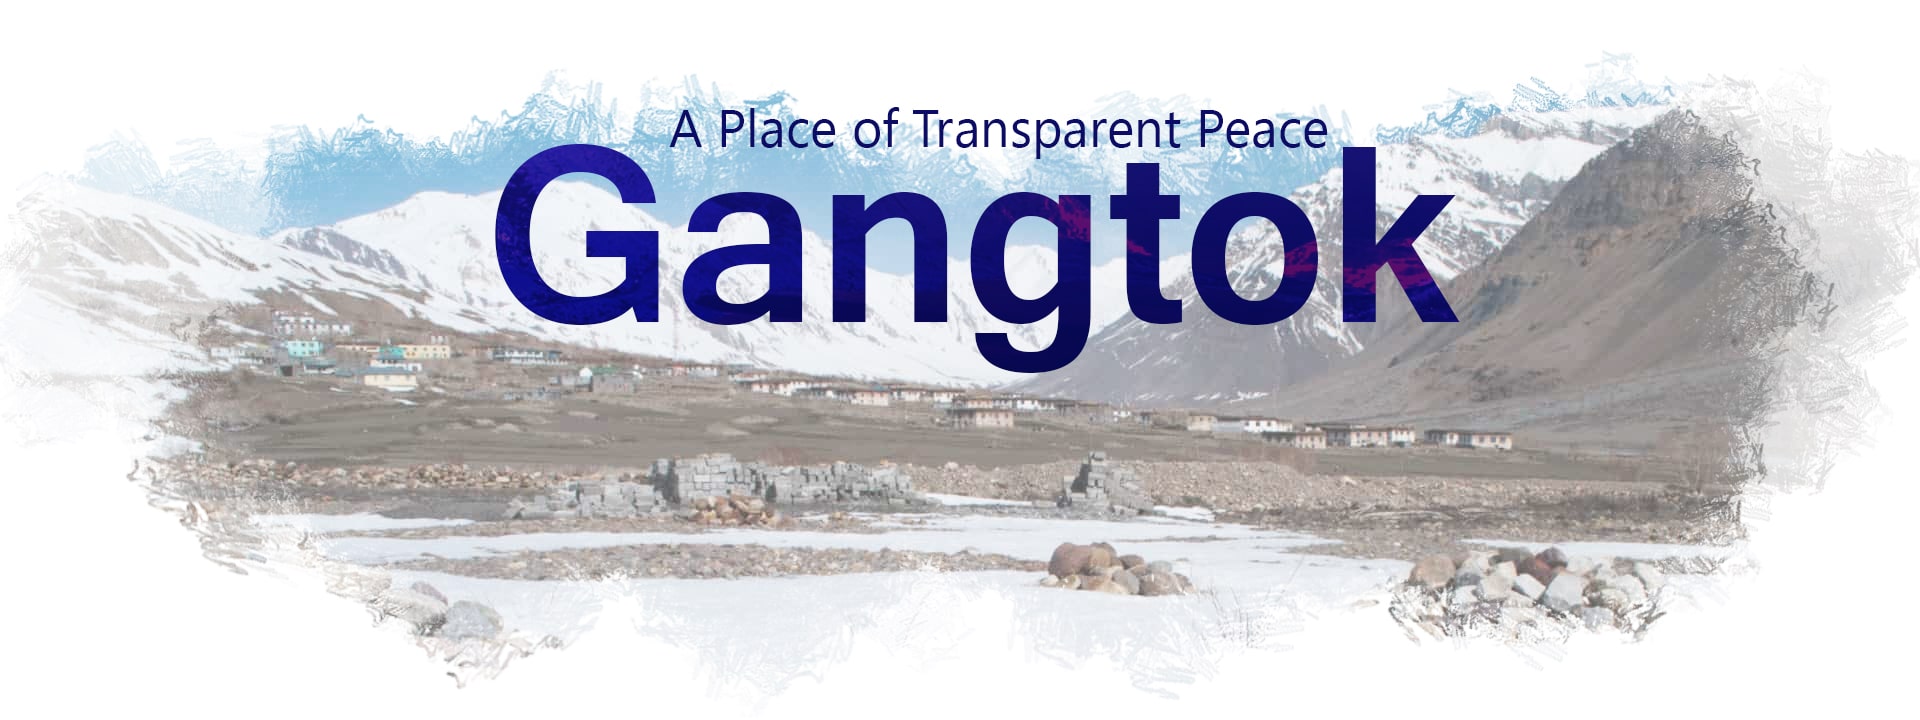 Gangtok a place of transparence peace